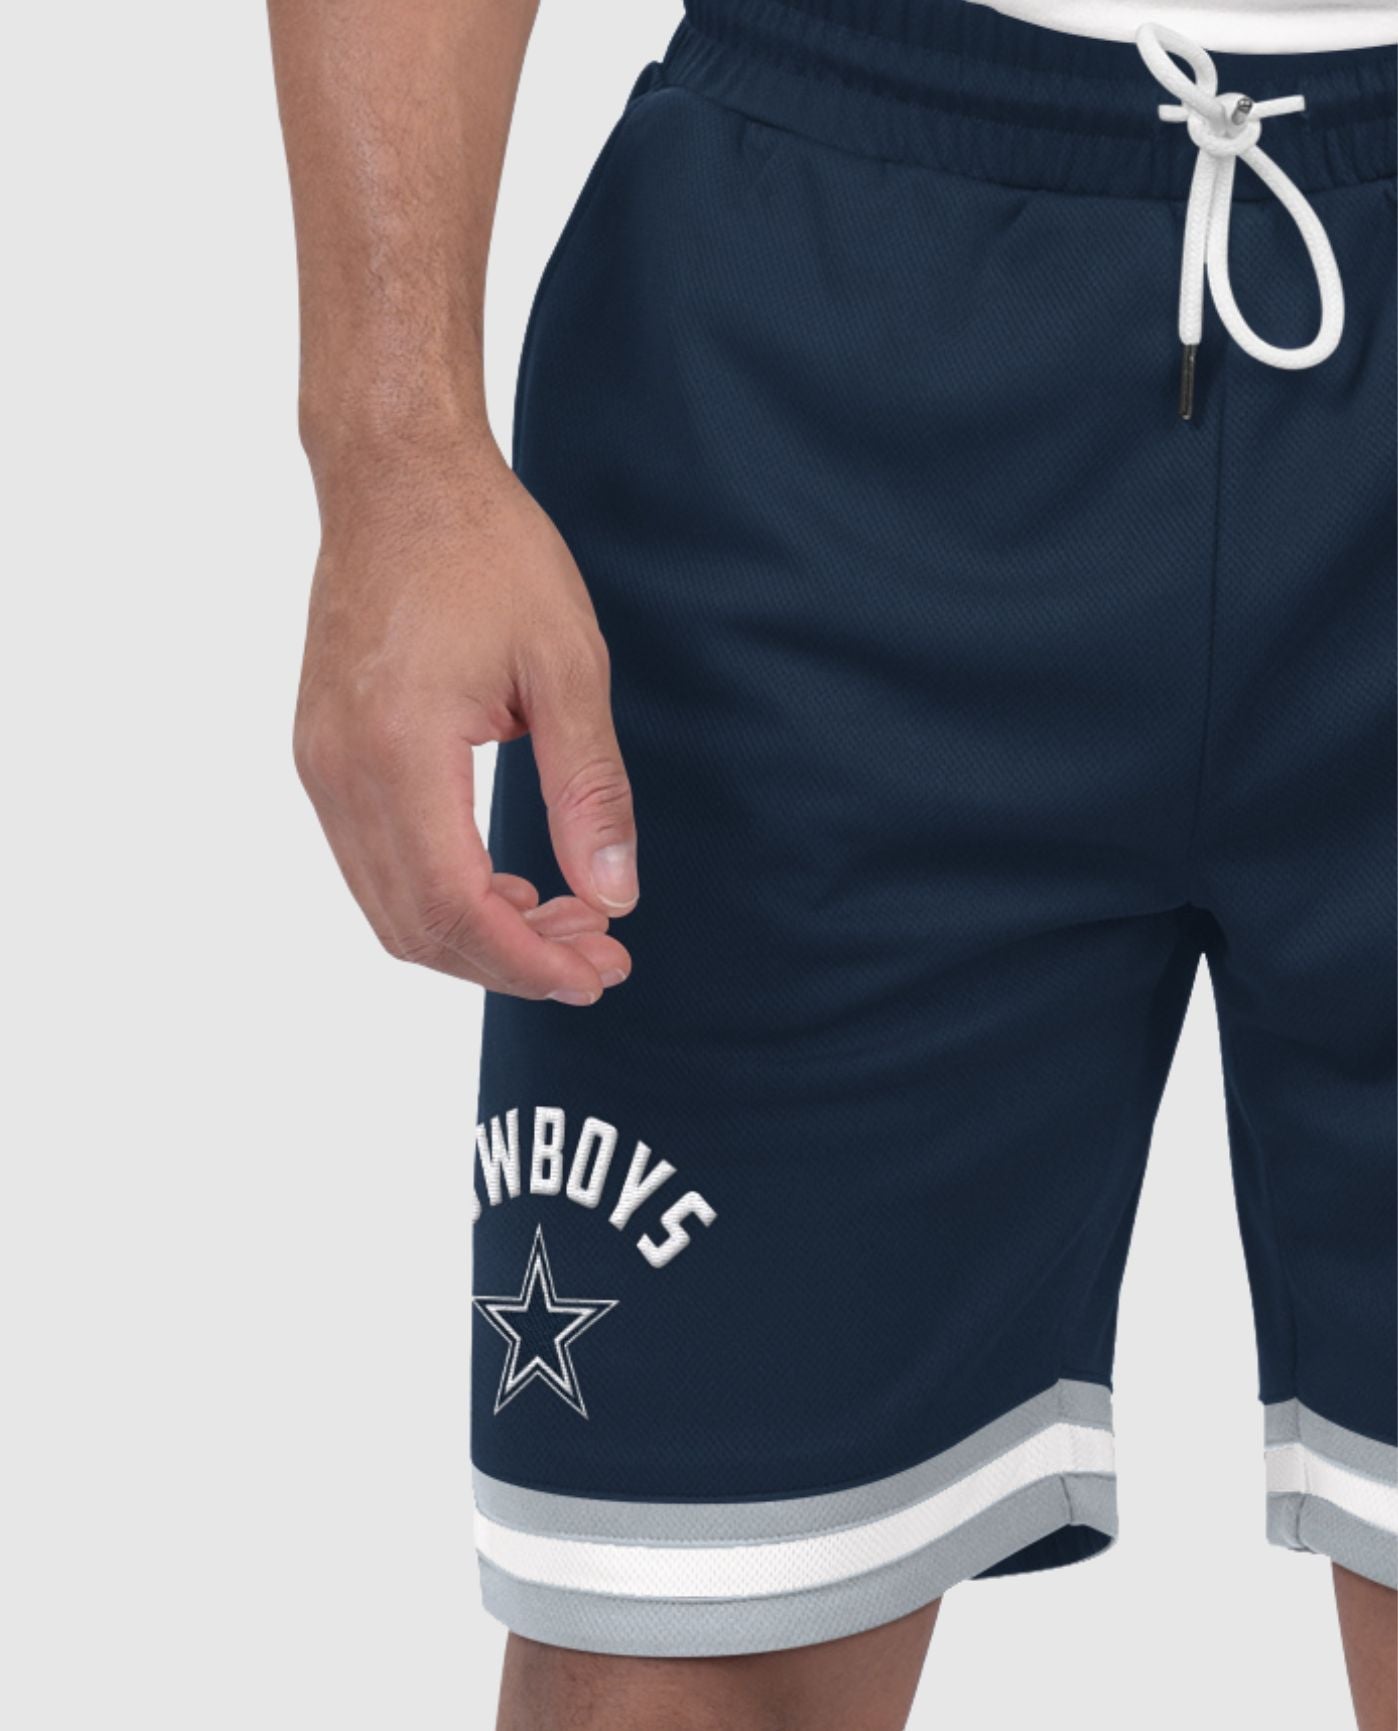 Front Logo on Hem of Dallas Cowboys Pro Player 9 Inch Basketball Shorts | Cowboys Navy